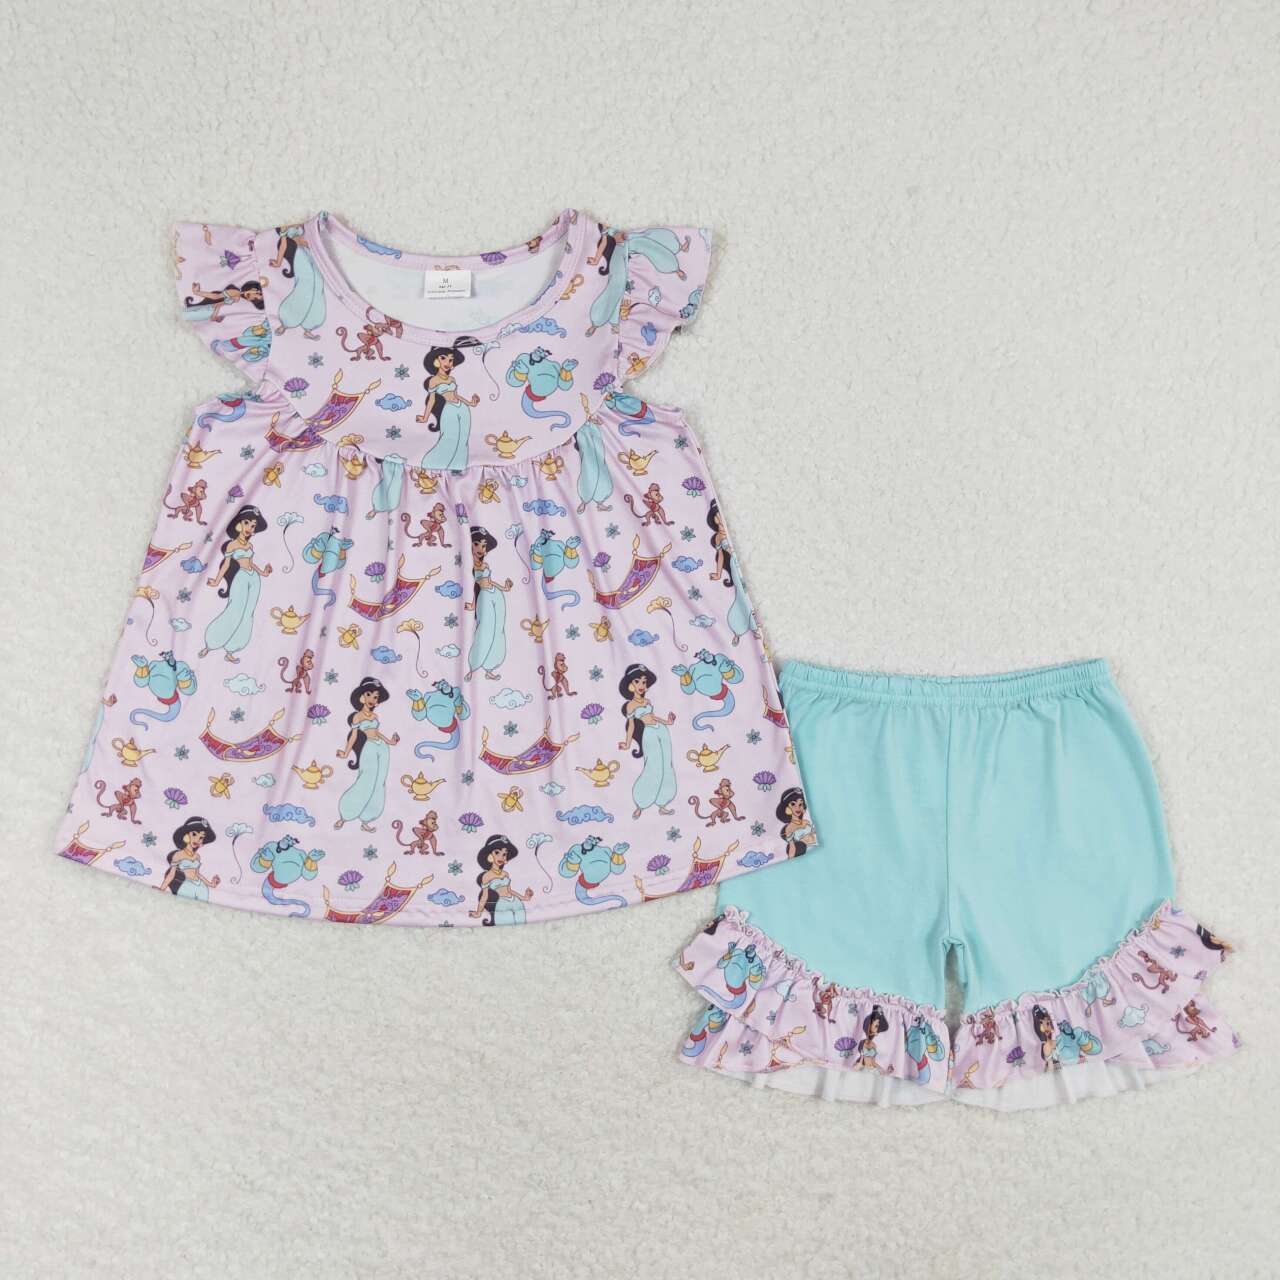 Cartoon Princess Top Ruffle Shorts Girls Summer Clothes Set Sisters Wear